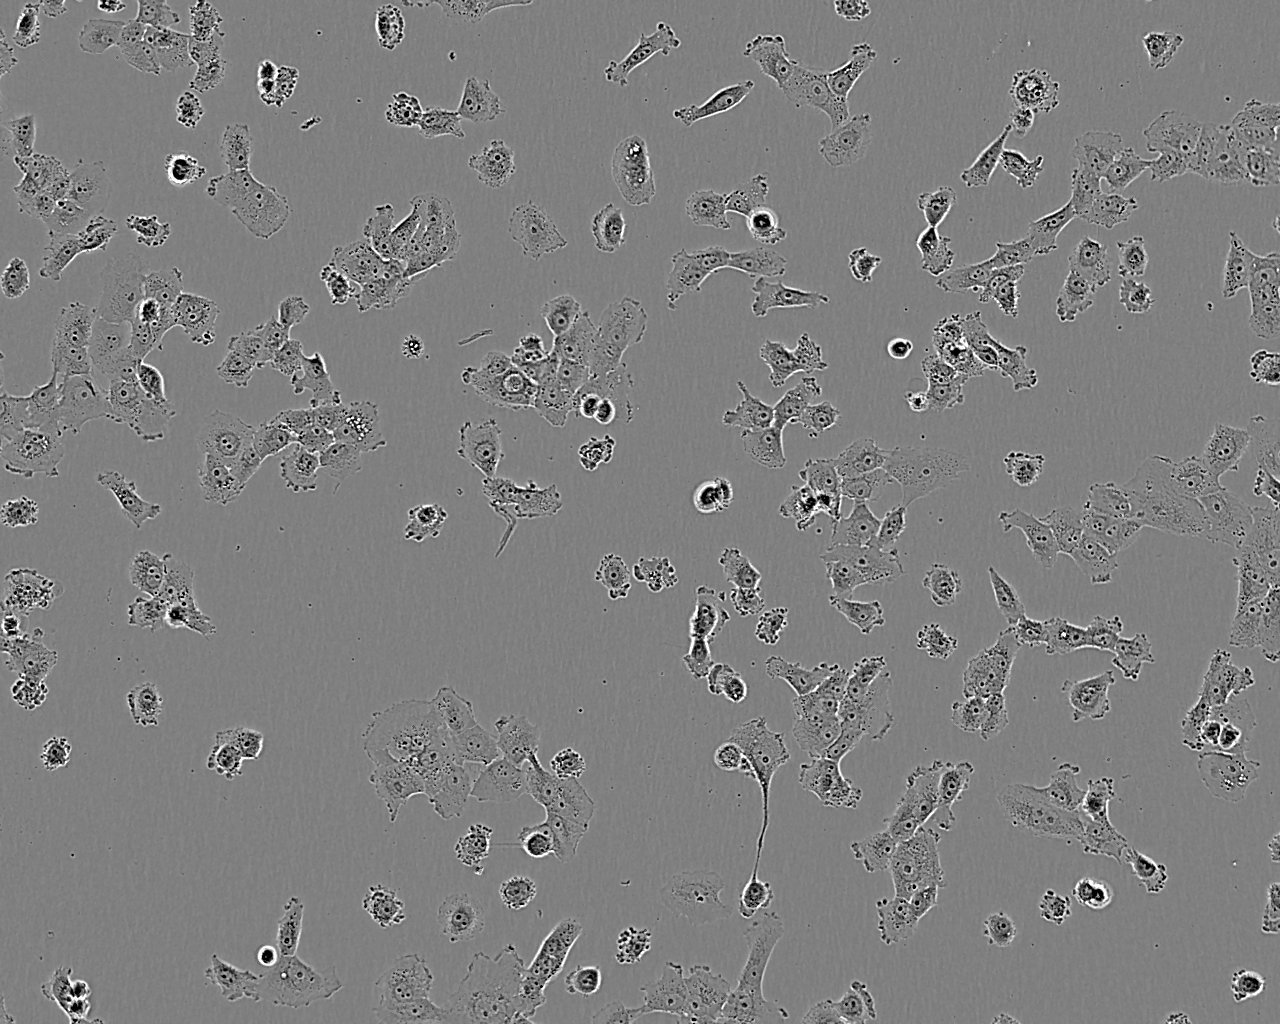 KNS-81 epithelioid cells人神经胶质瘤细胞系